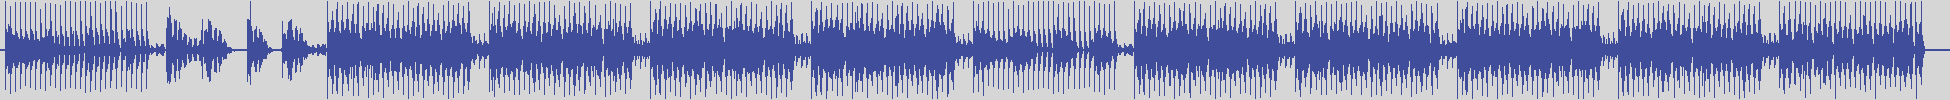 nf_boyz_records [NFY064] Ultra Fine - Just Tell Me [Basement Bassliner House Mix] audio wave form